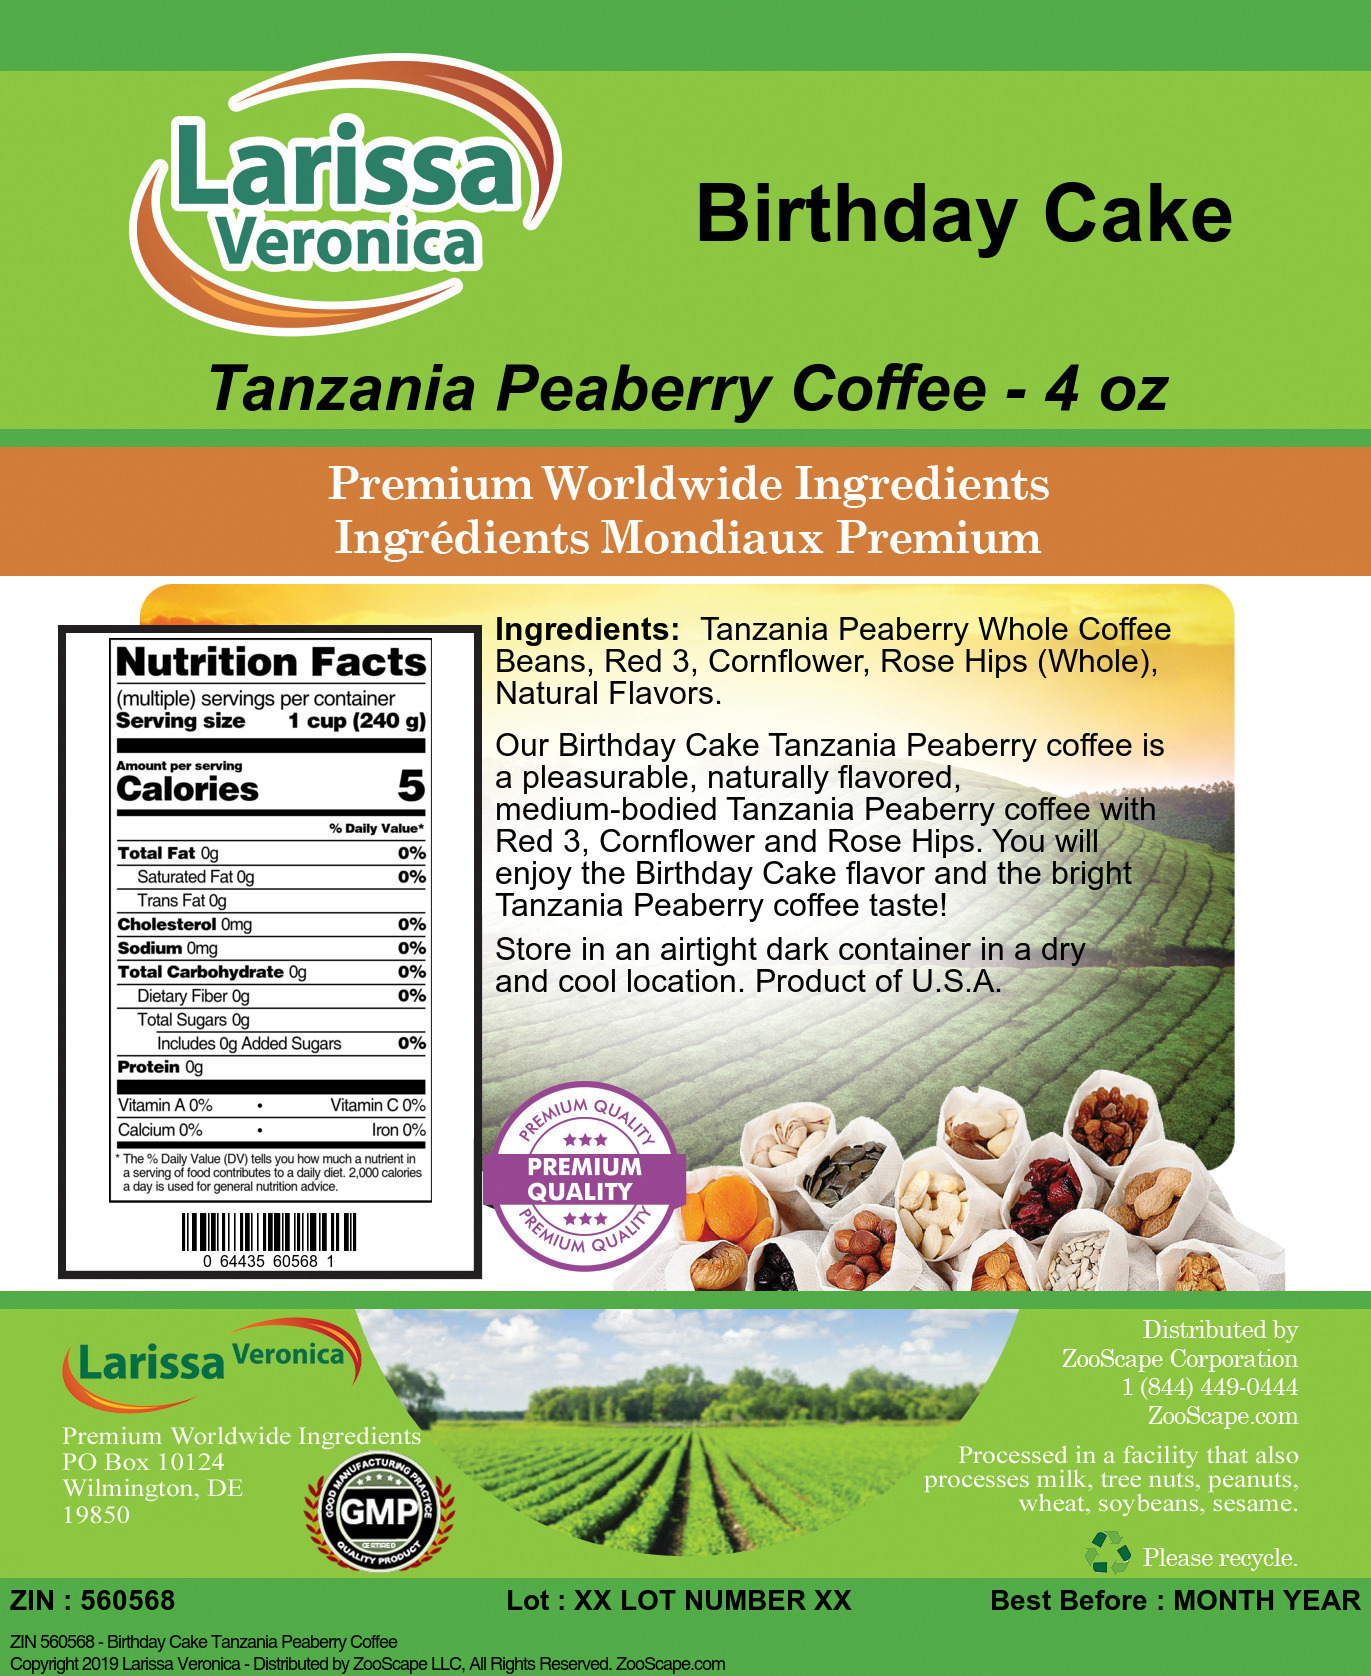 Birthday Cake Tanzania Peaberry Coffee - Label